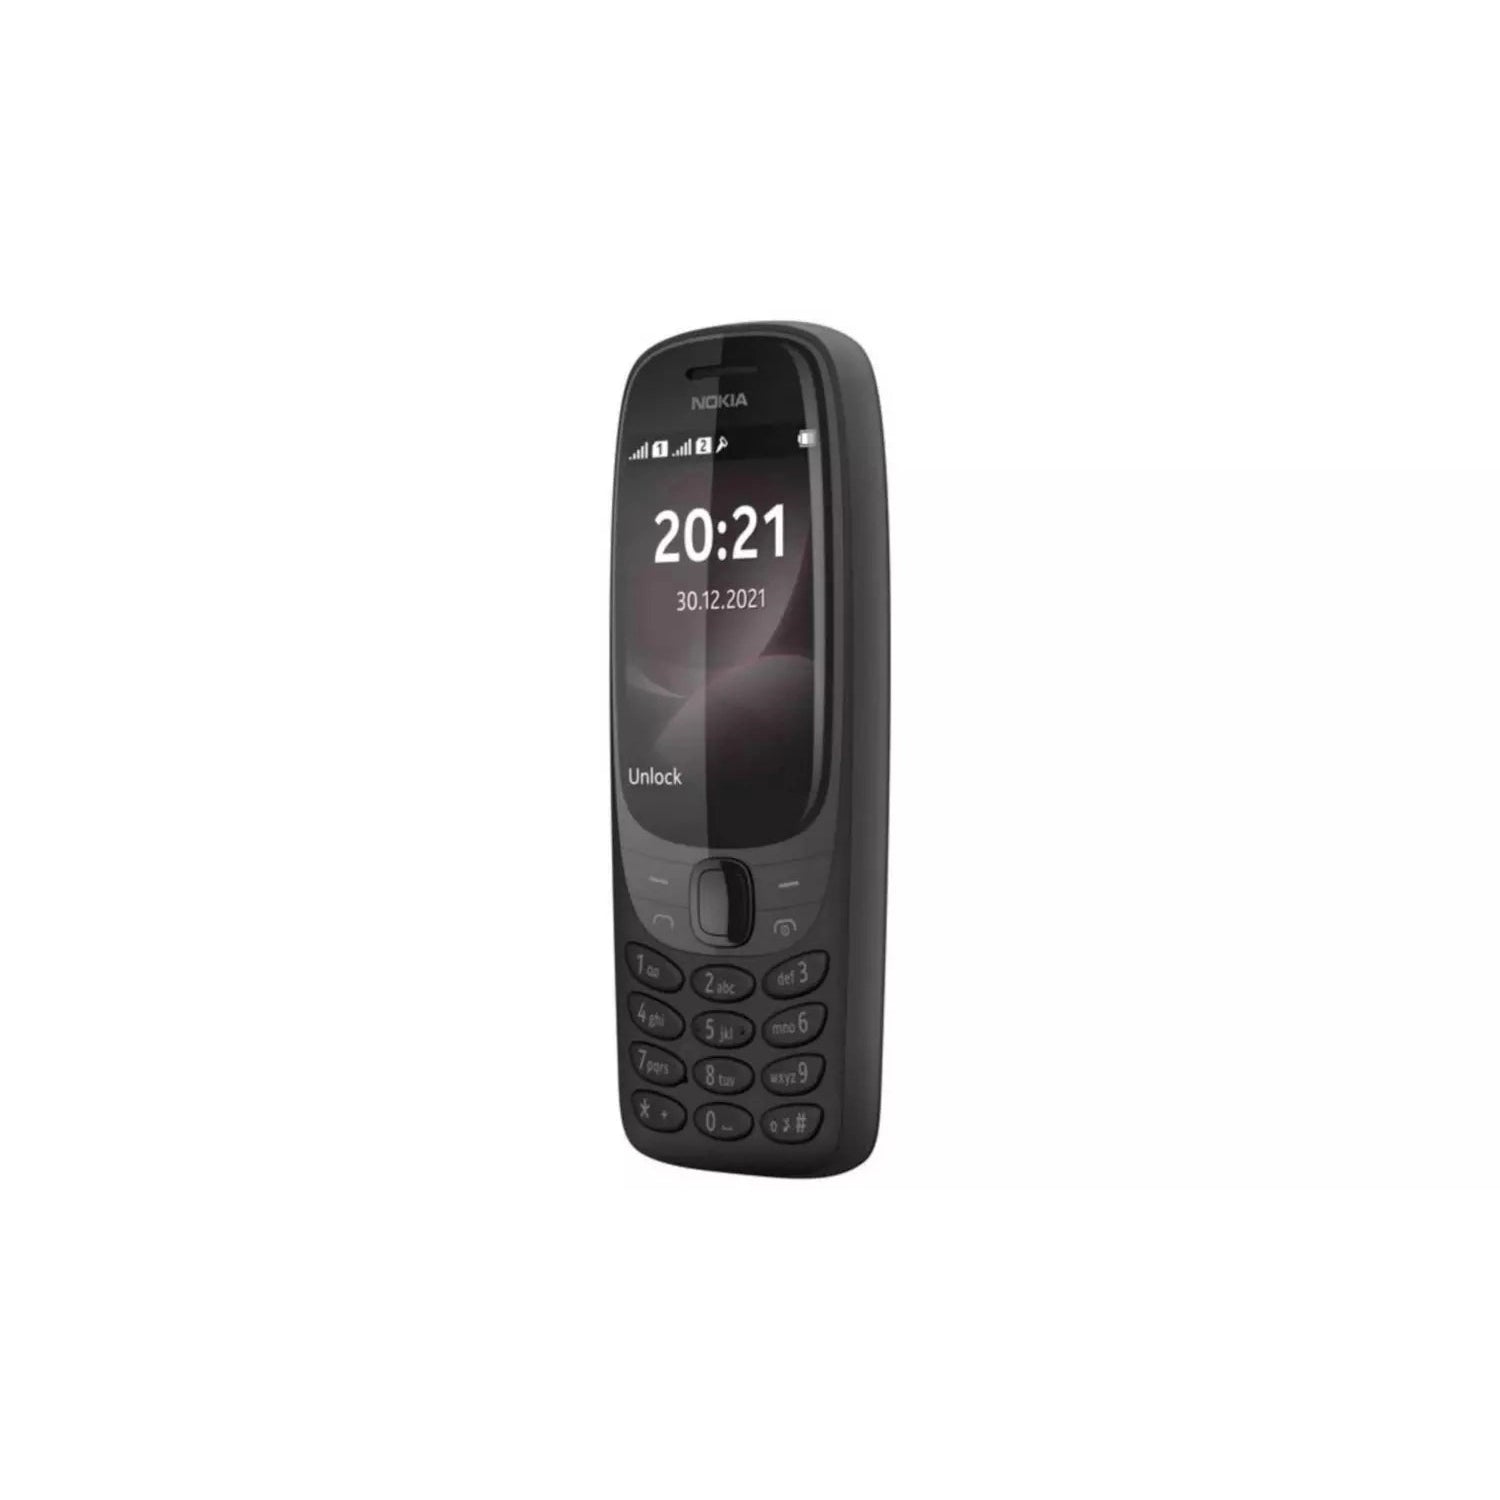 Nokia 6310 4G Sim Free Mobile Phone - Black - Refurbished Good